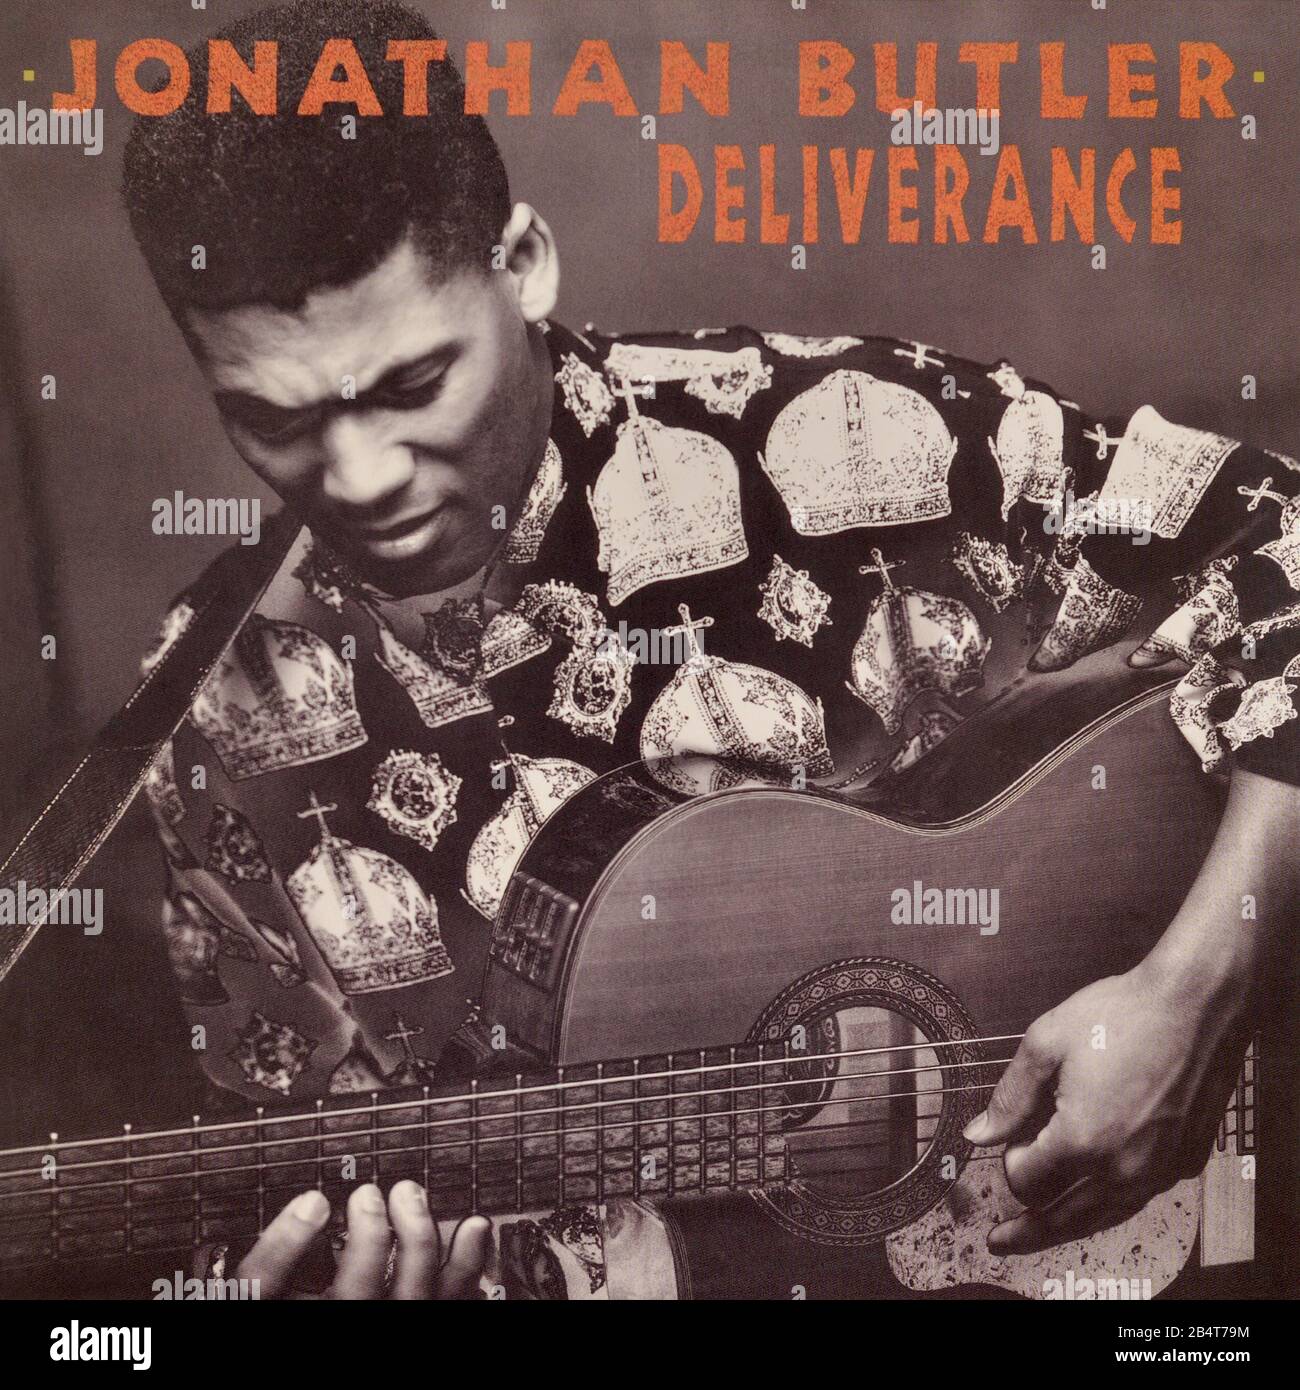 Jonathan Butler - original vinyl album cover - Deliverance - 1990 Stock Photo